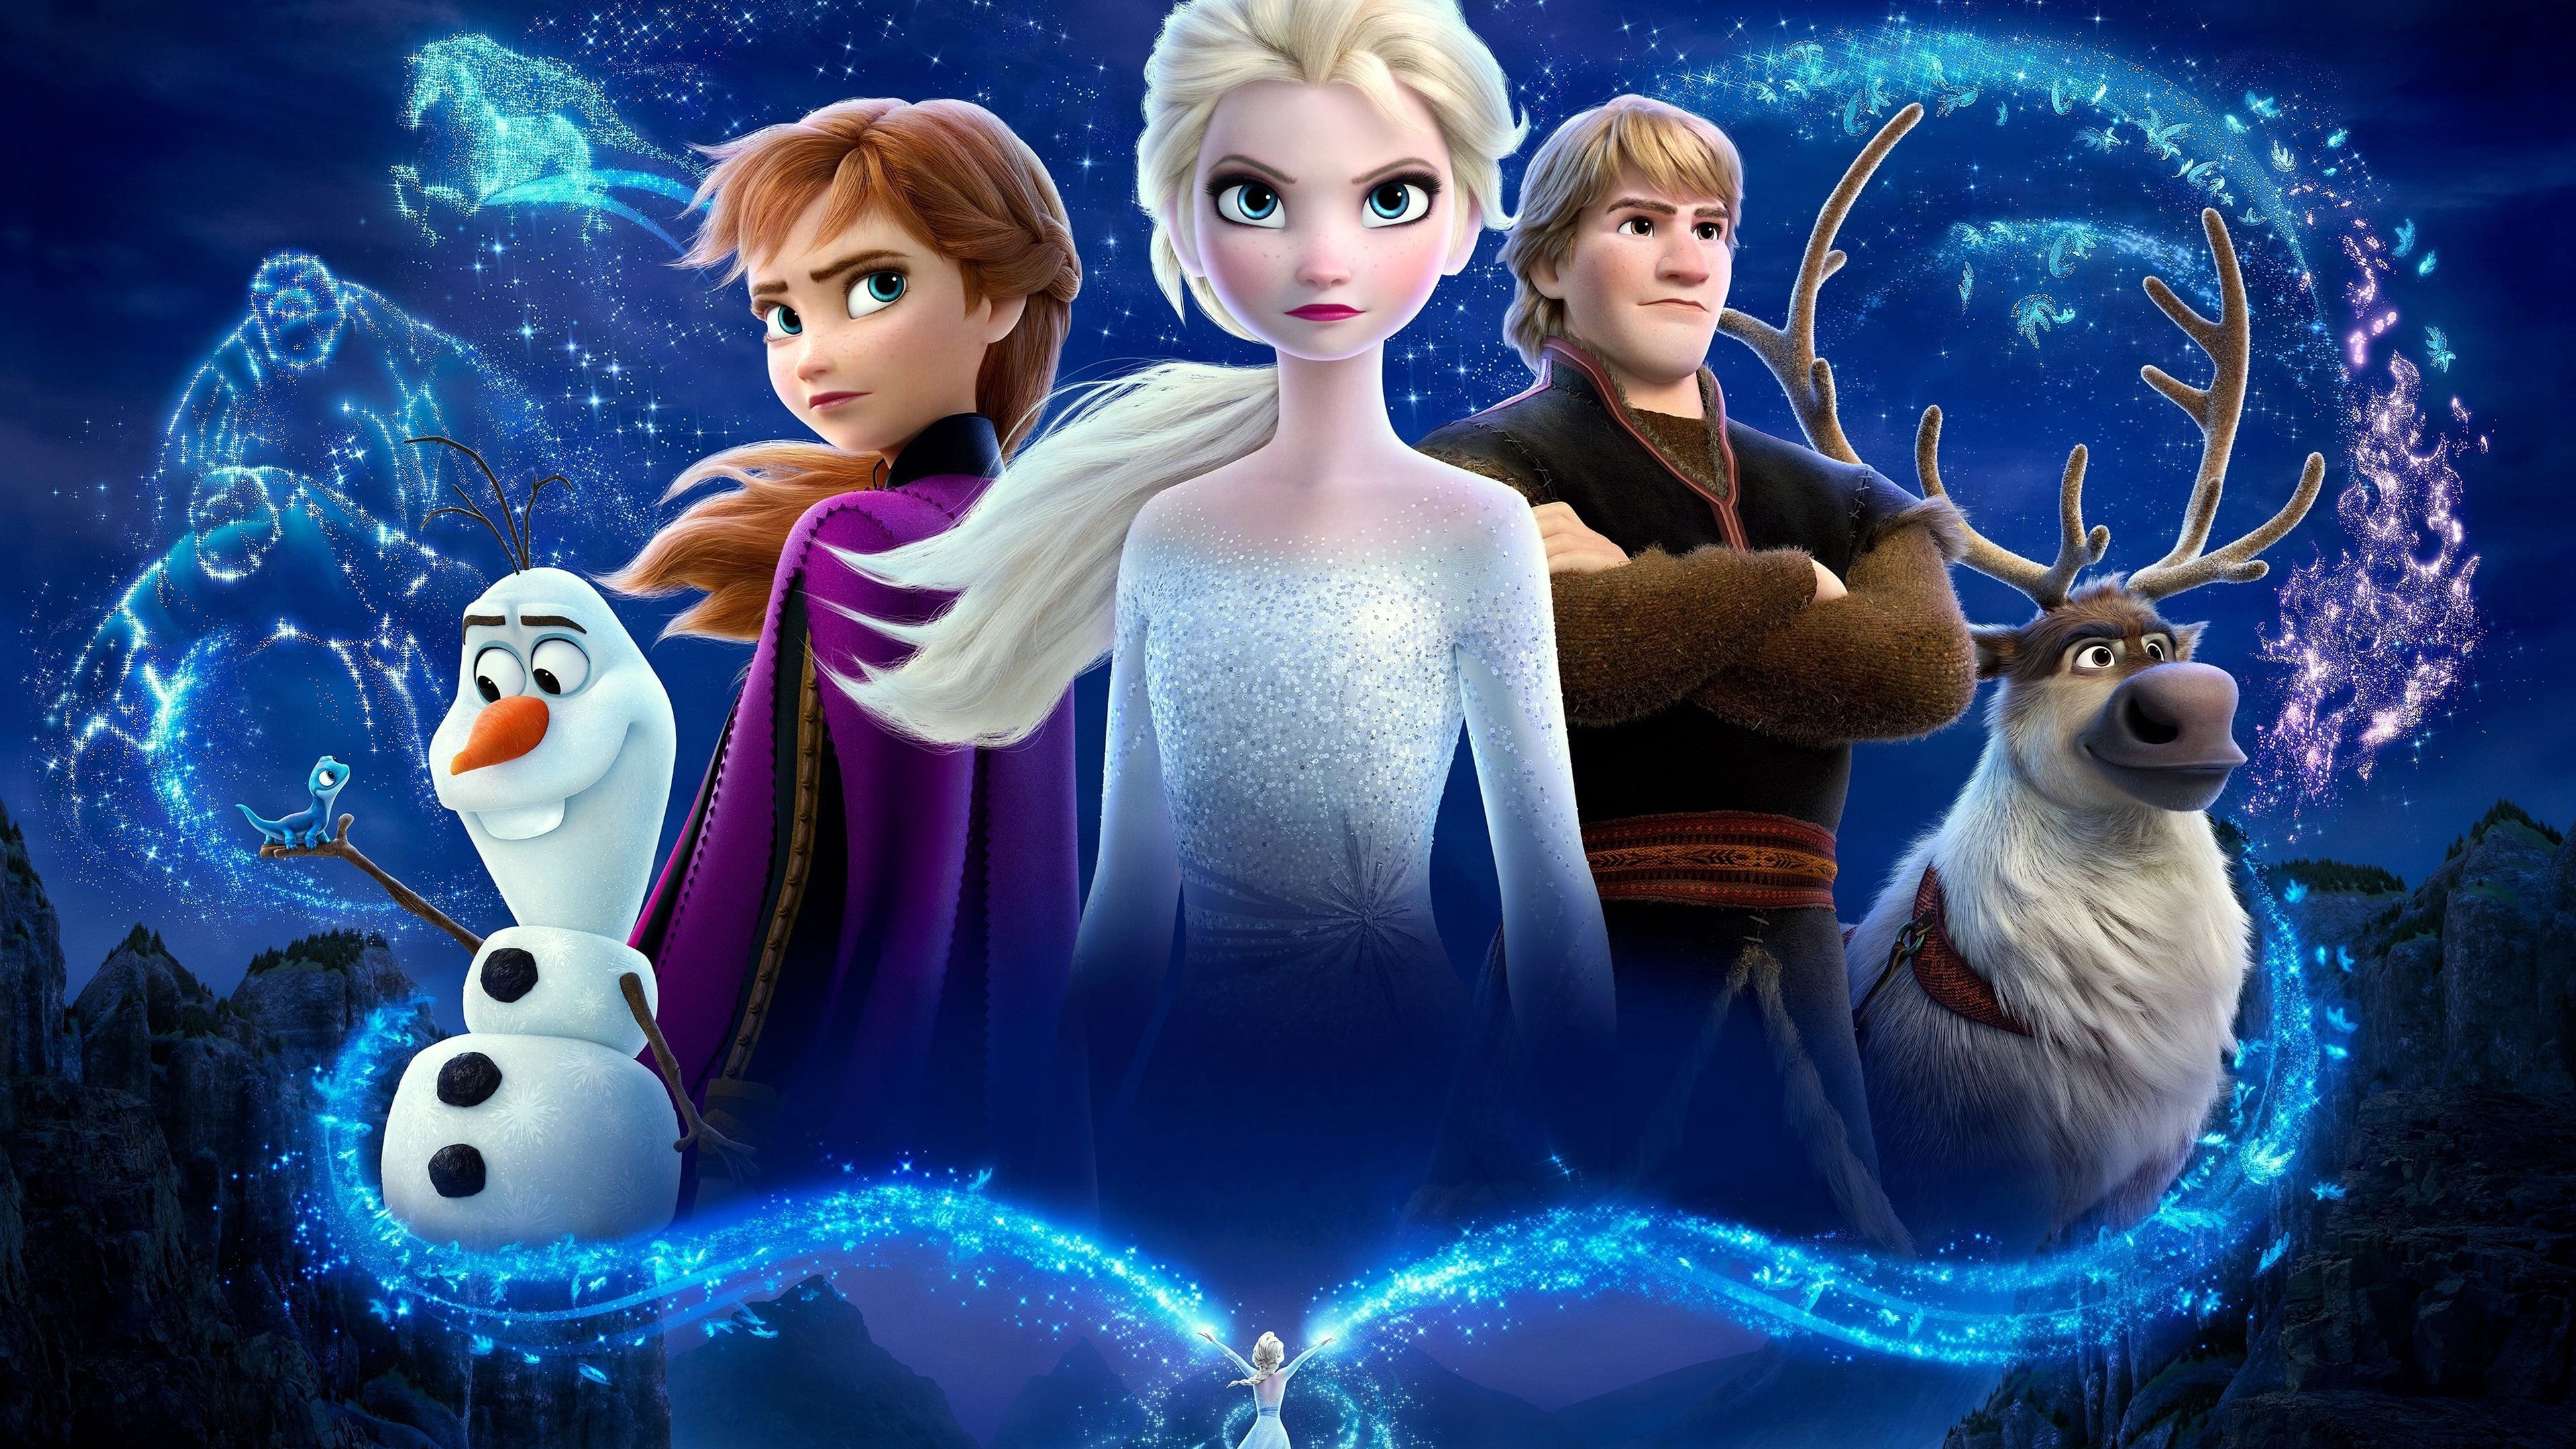 Frozen 1 Full Movie Download.